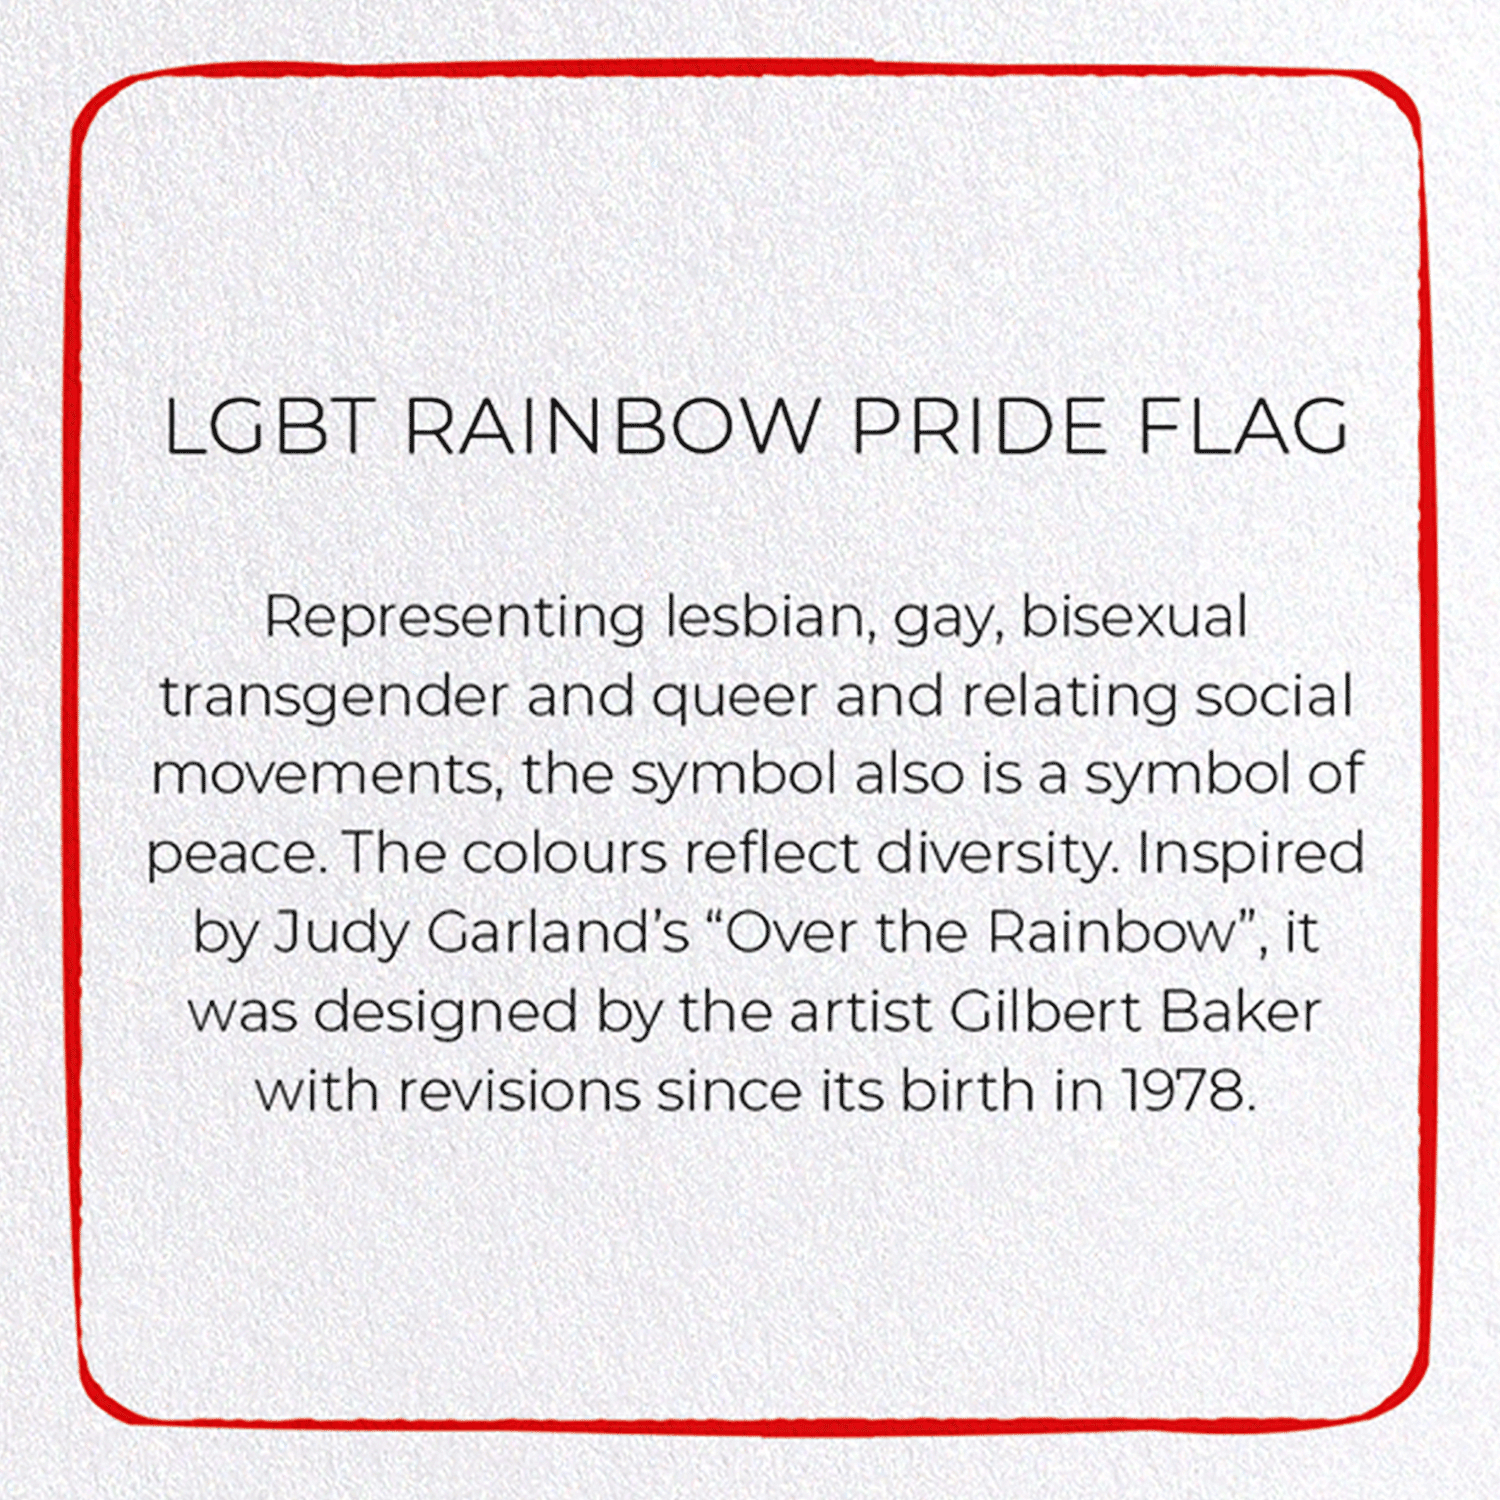 LGBT RAINBOW PRIDE FLAG: 8xCards